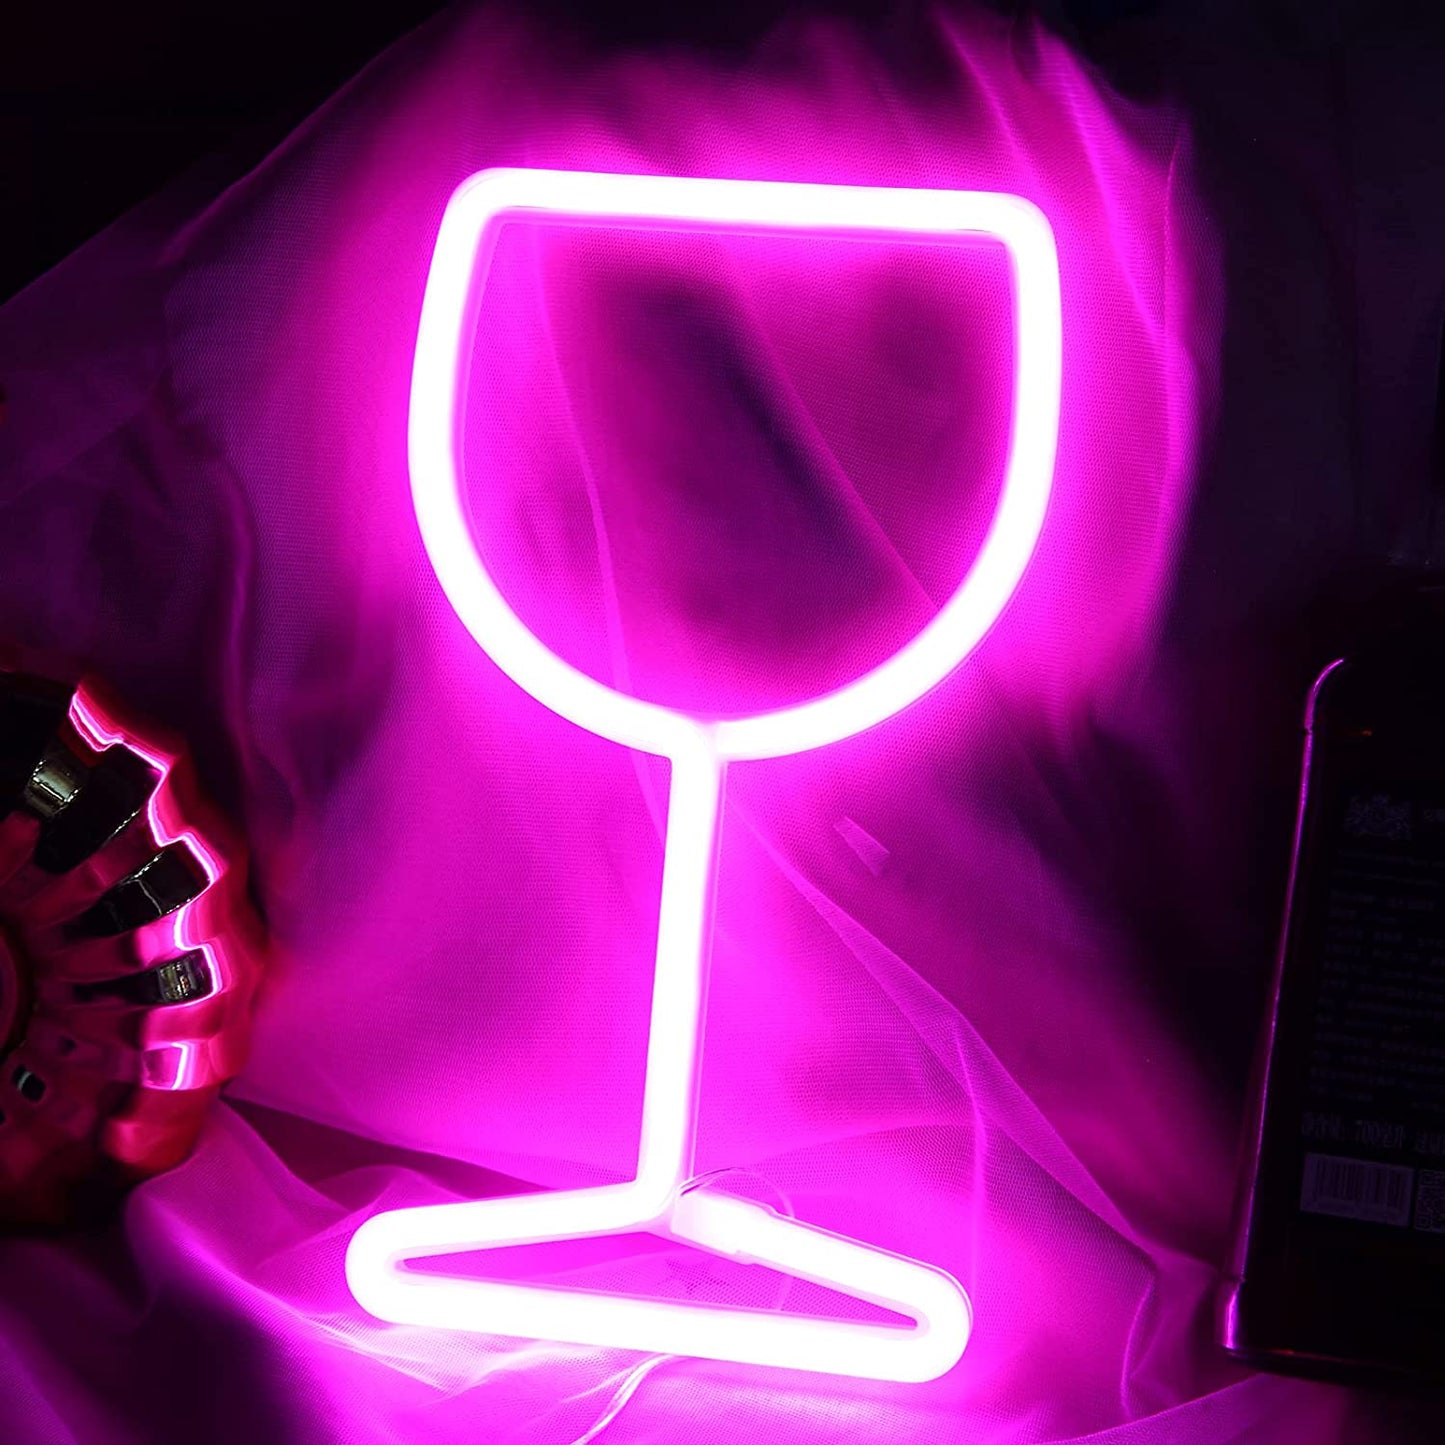 Neon Signs Wine Glass Lights - Bar Restaurant Nightclub Beach Shop Holiday Celebration Party Neon Lights, LED Home Decor Neon Signs Wine Cellar Accessories (Pink)